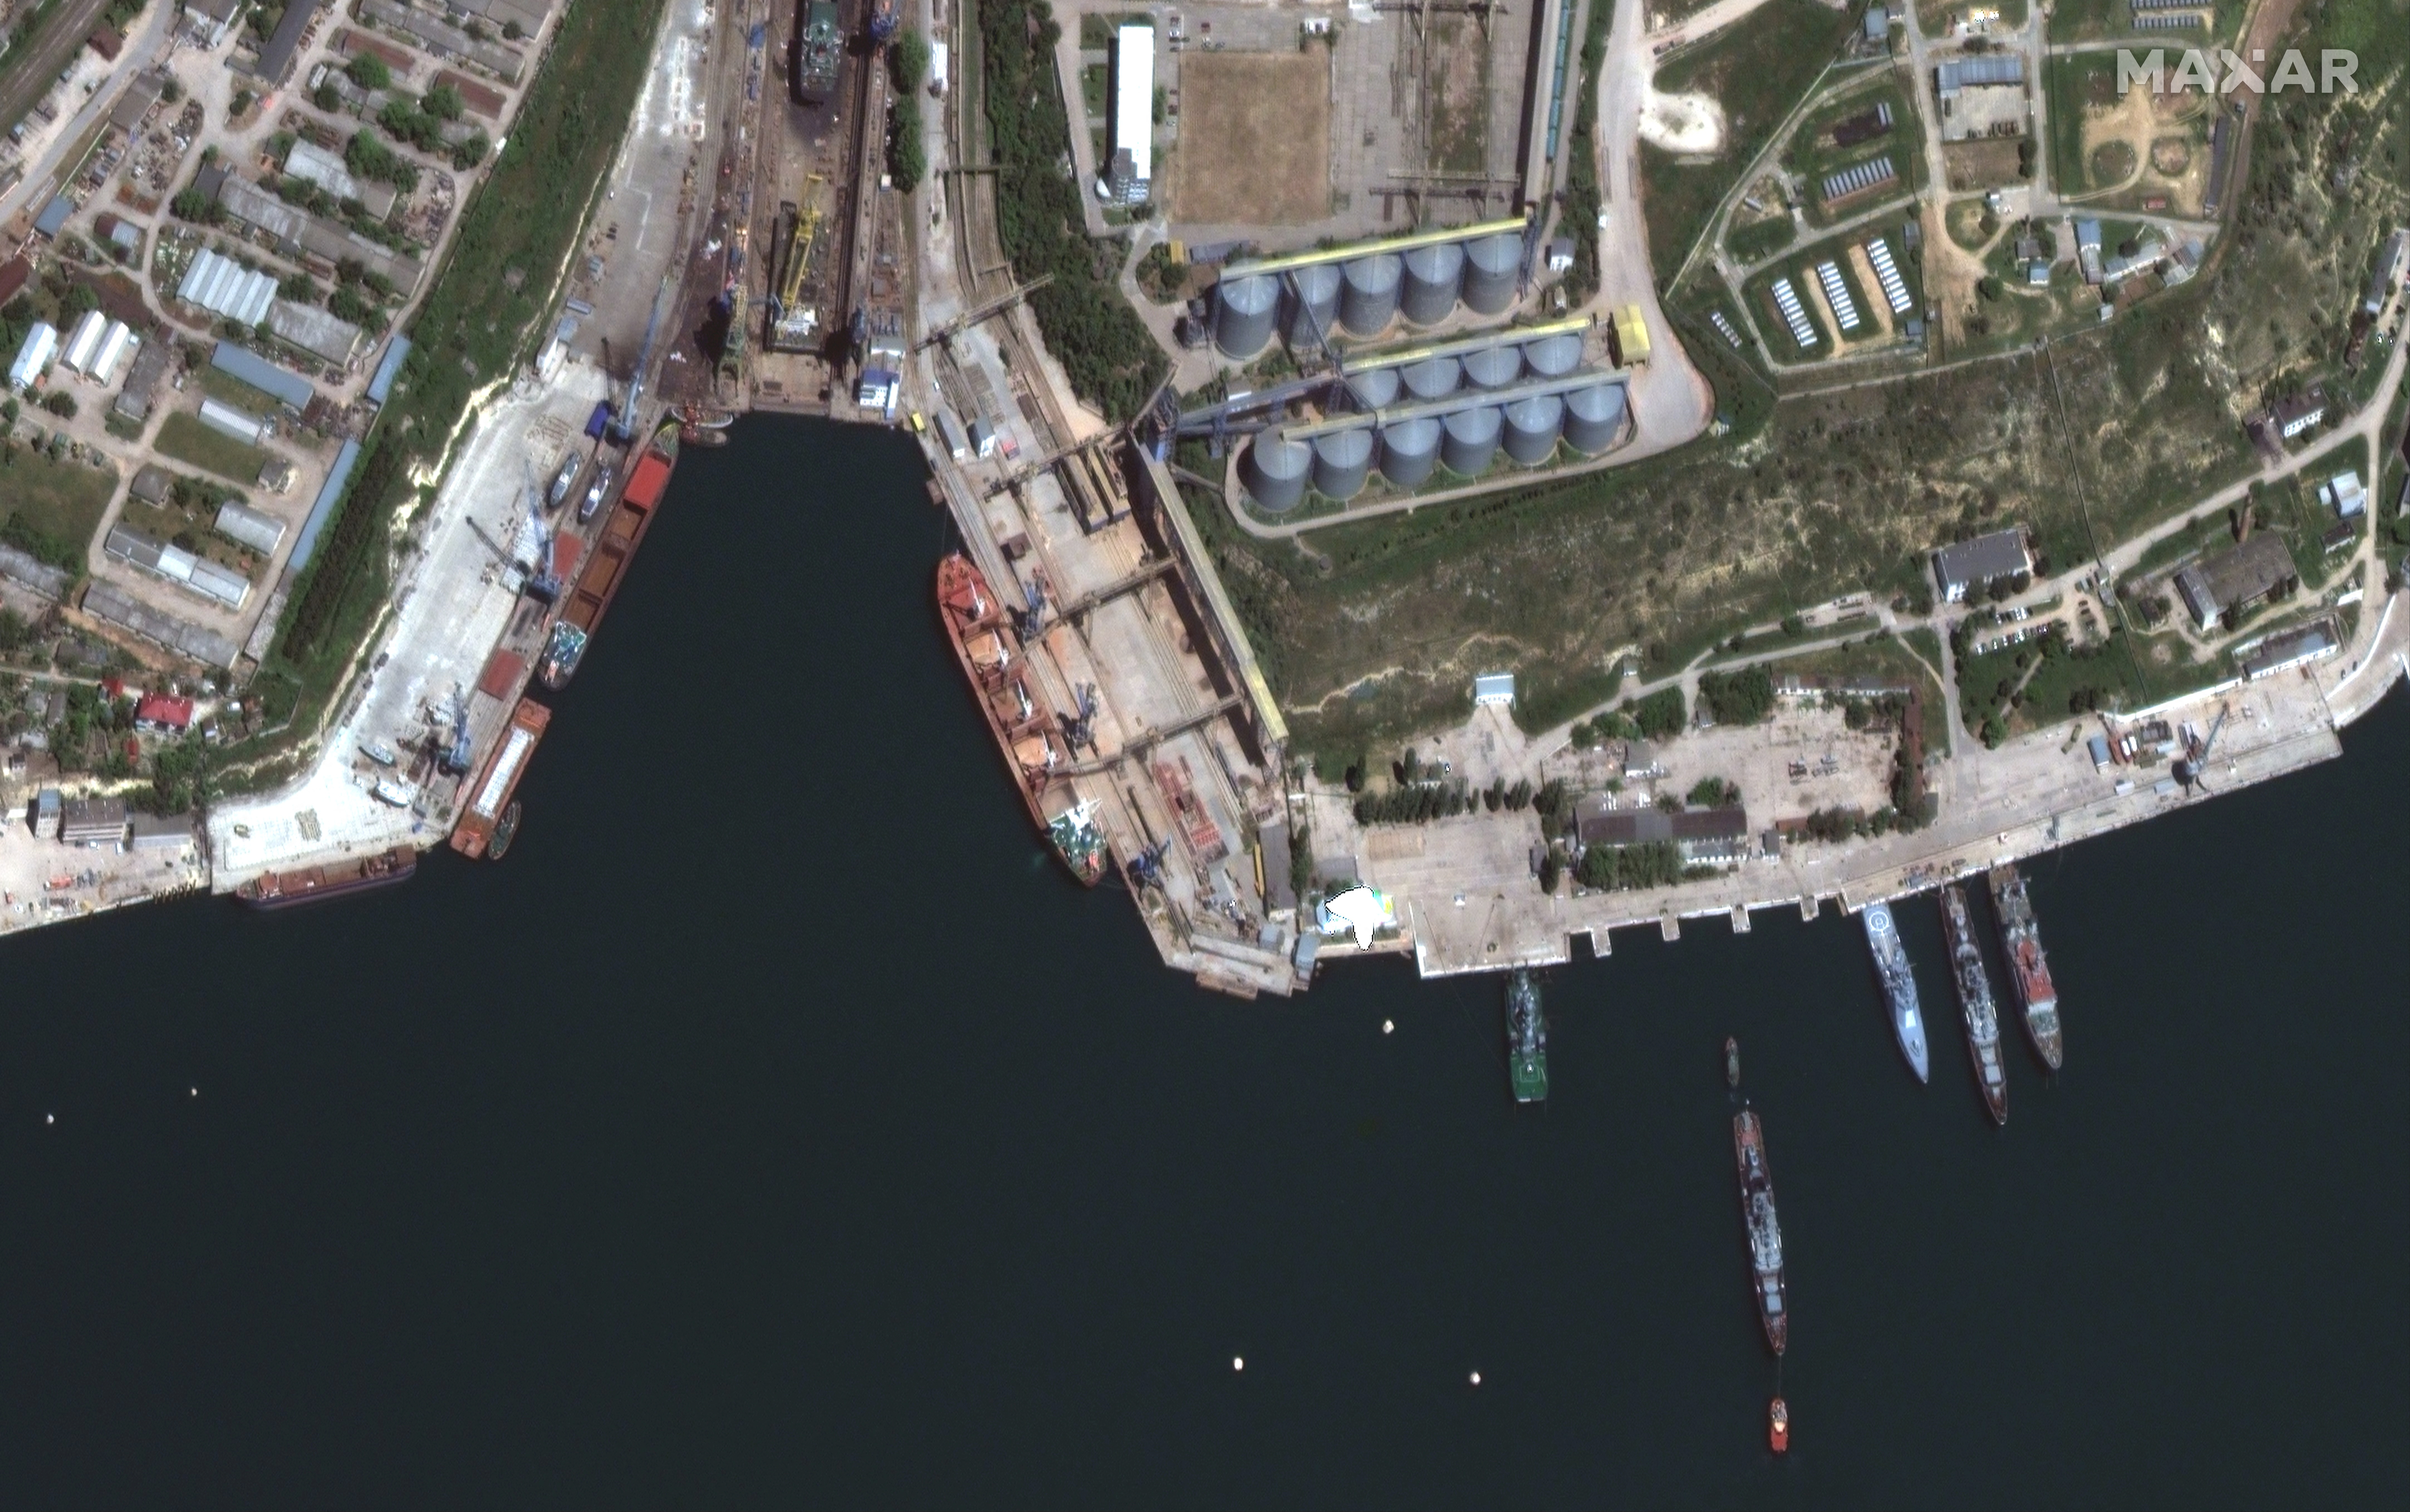 A satellite image shows a bulk carrier ship loading grain at the port of Sevastopol